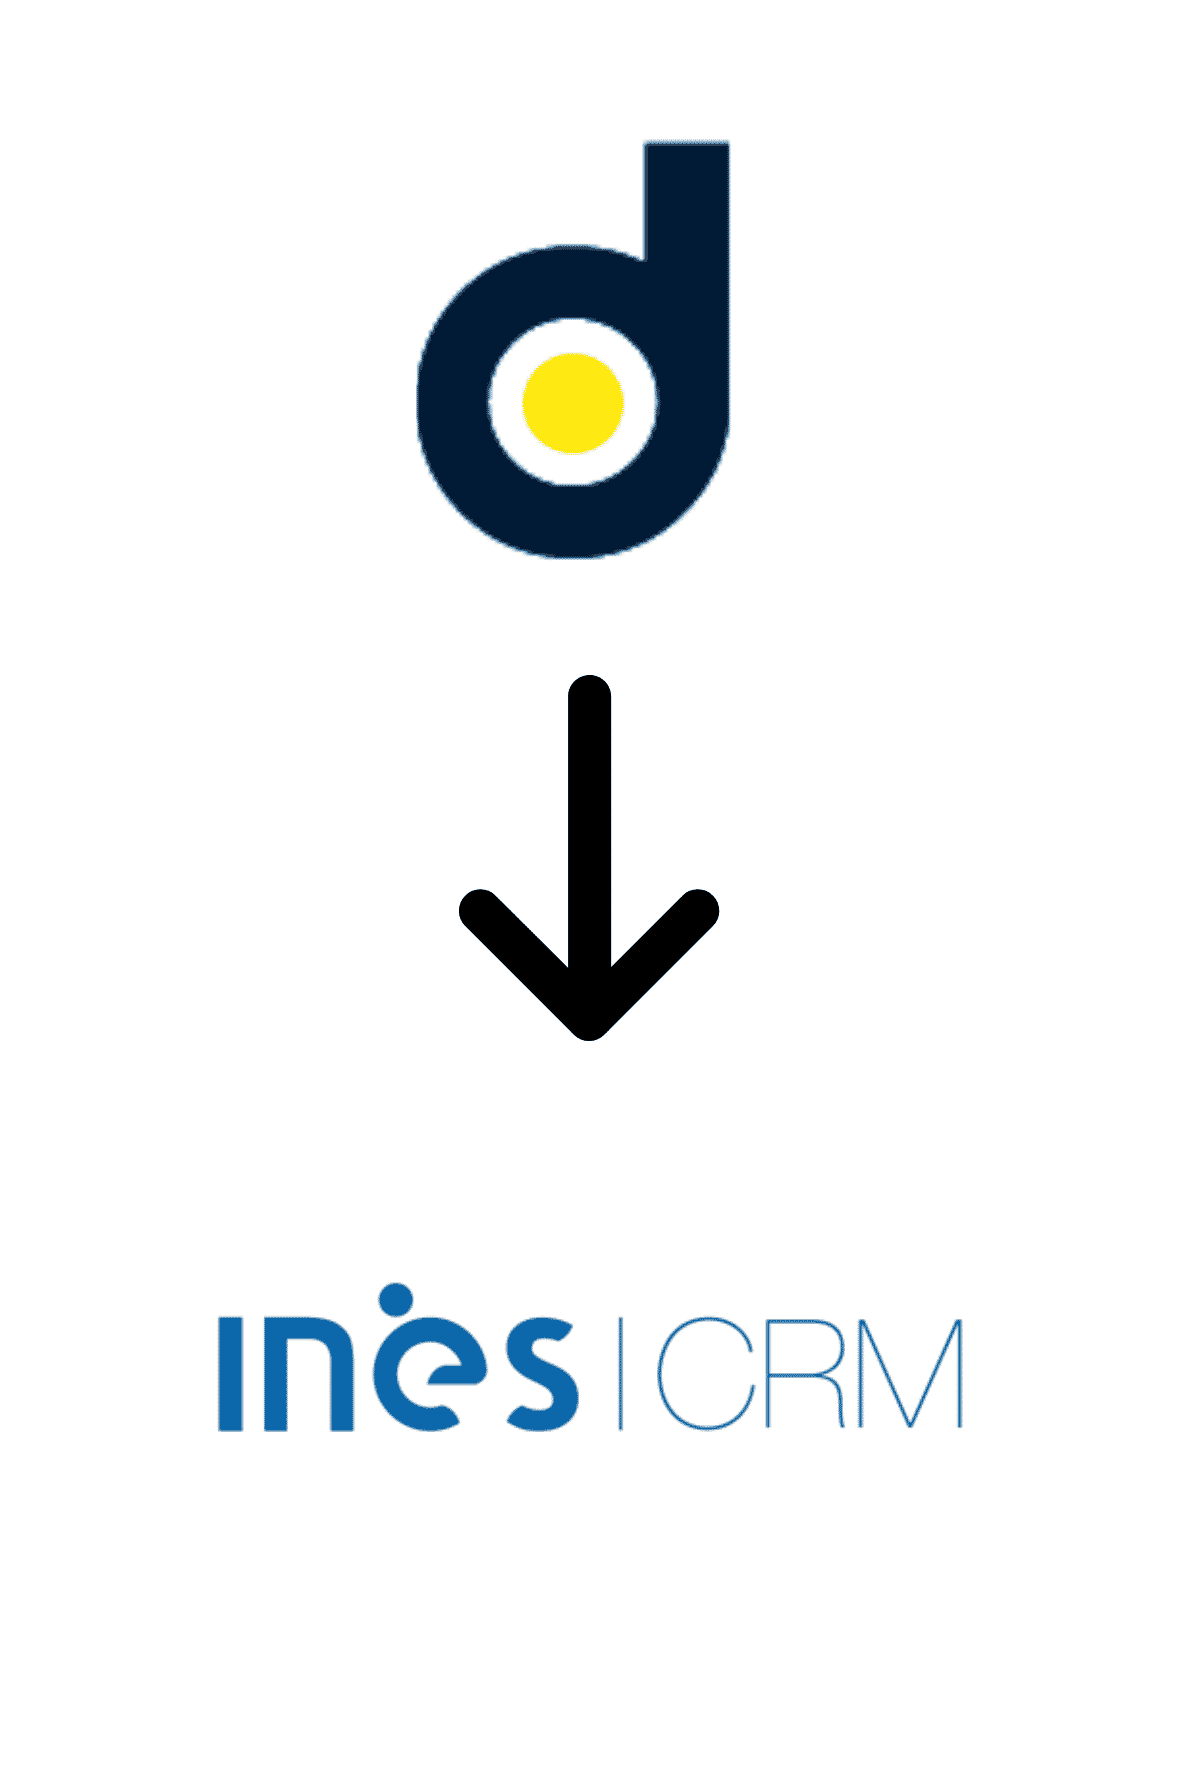 intégration Decidento / ines crm